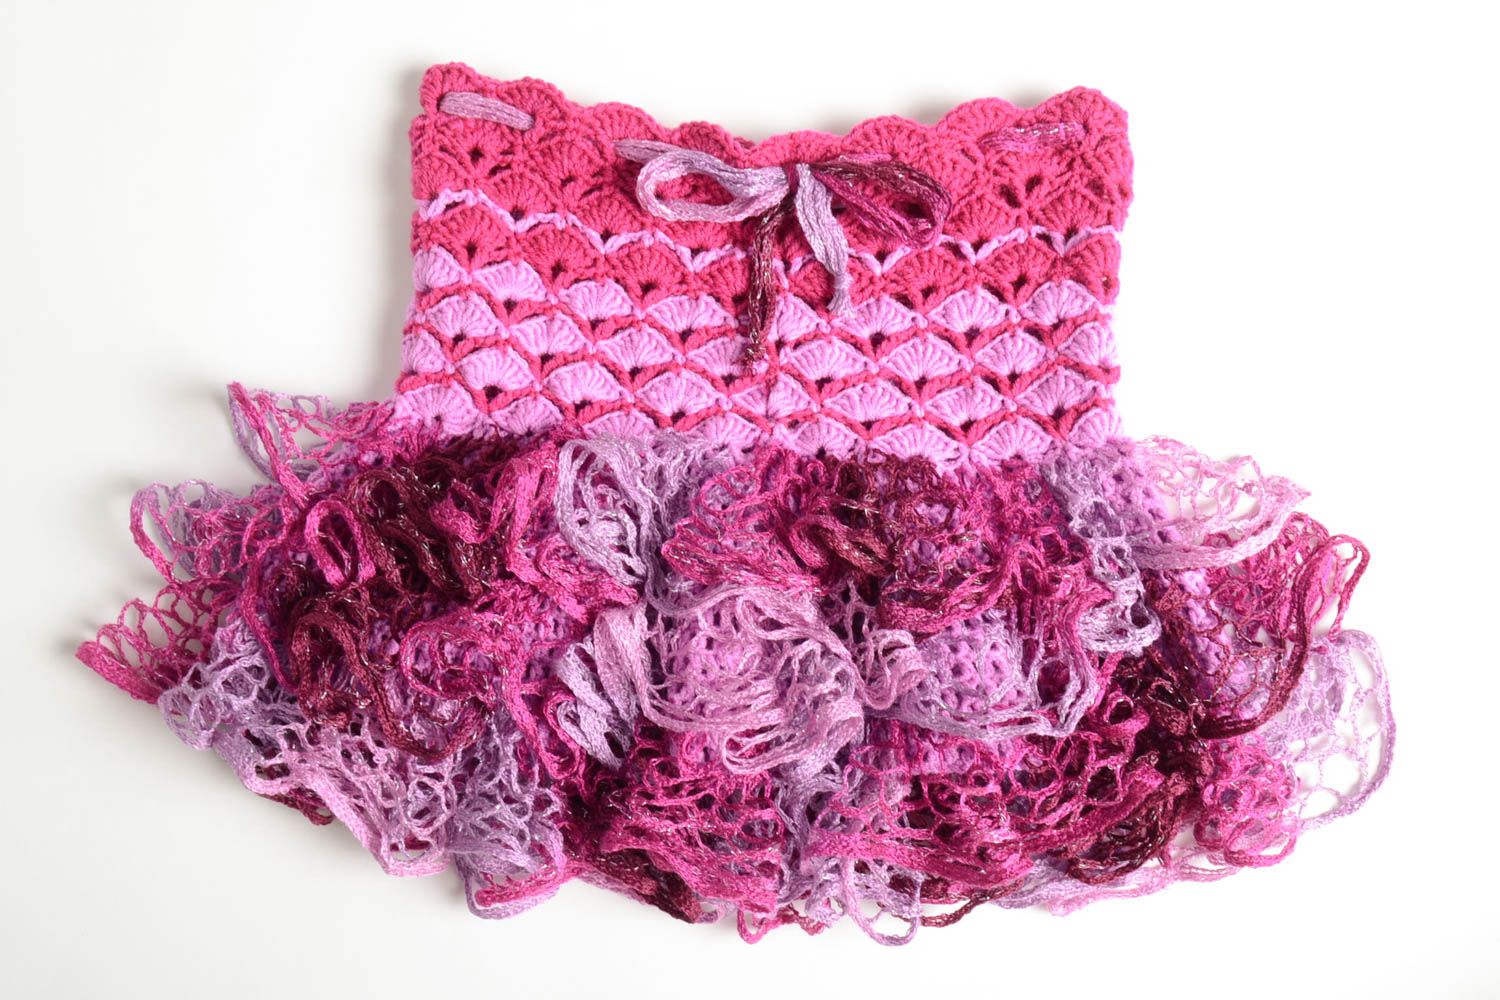 Stylish handmade childrens skirt crochet lace skirt baby accessories gift ideas photo 1